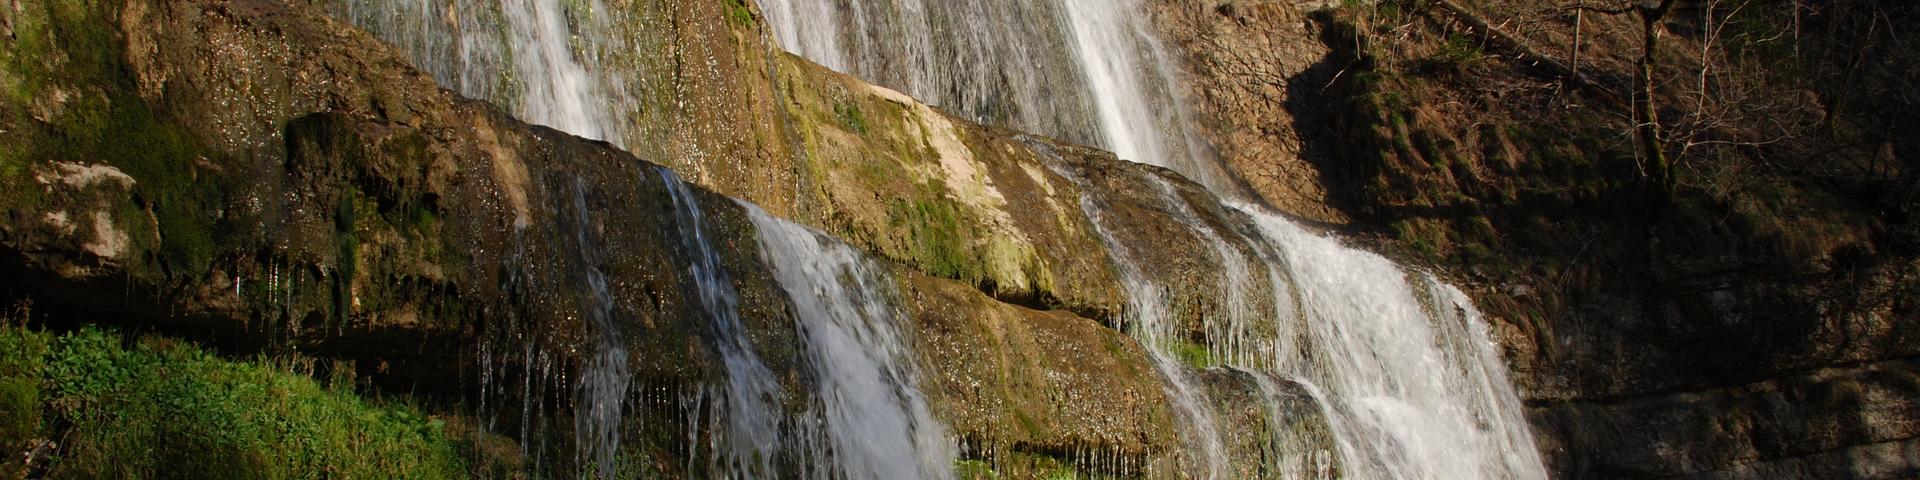 The Hérisson falls, Jura